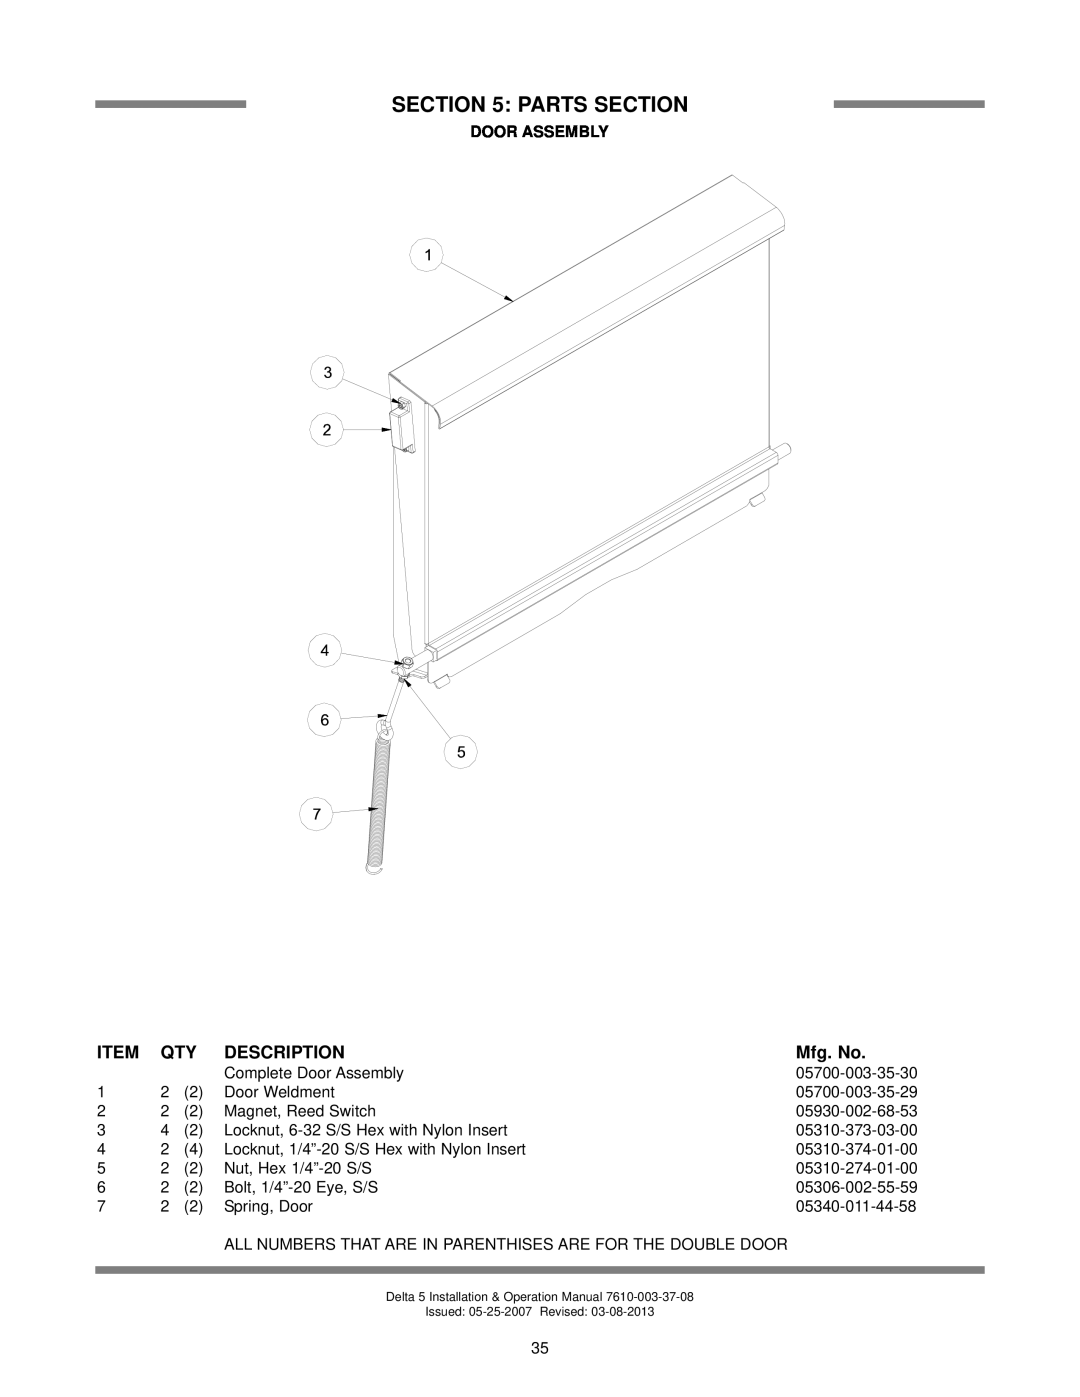 Jackson Chemical Sanitizing Dishmachine technical manual Door Assembly, Parts Section, Description, Mfg. No 